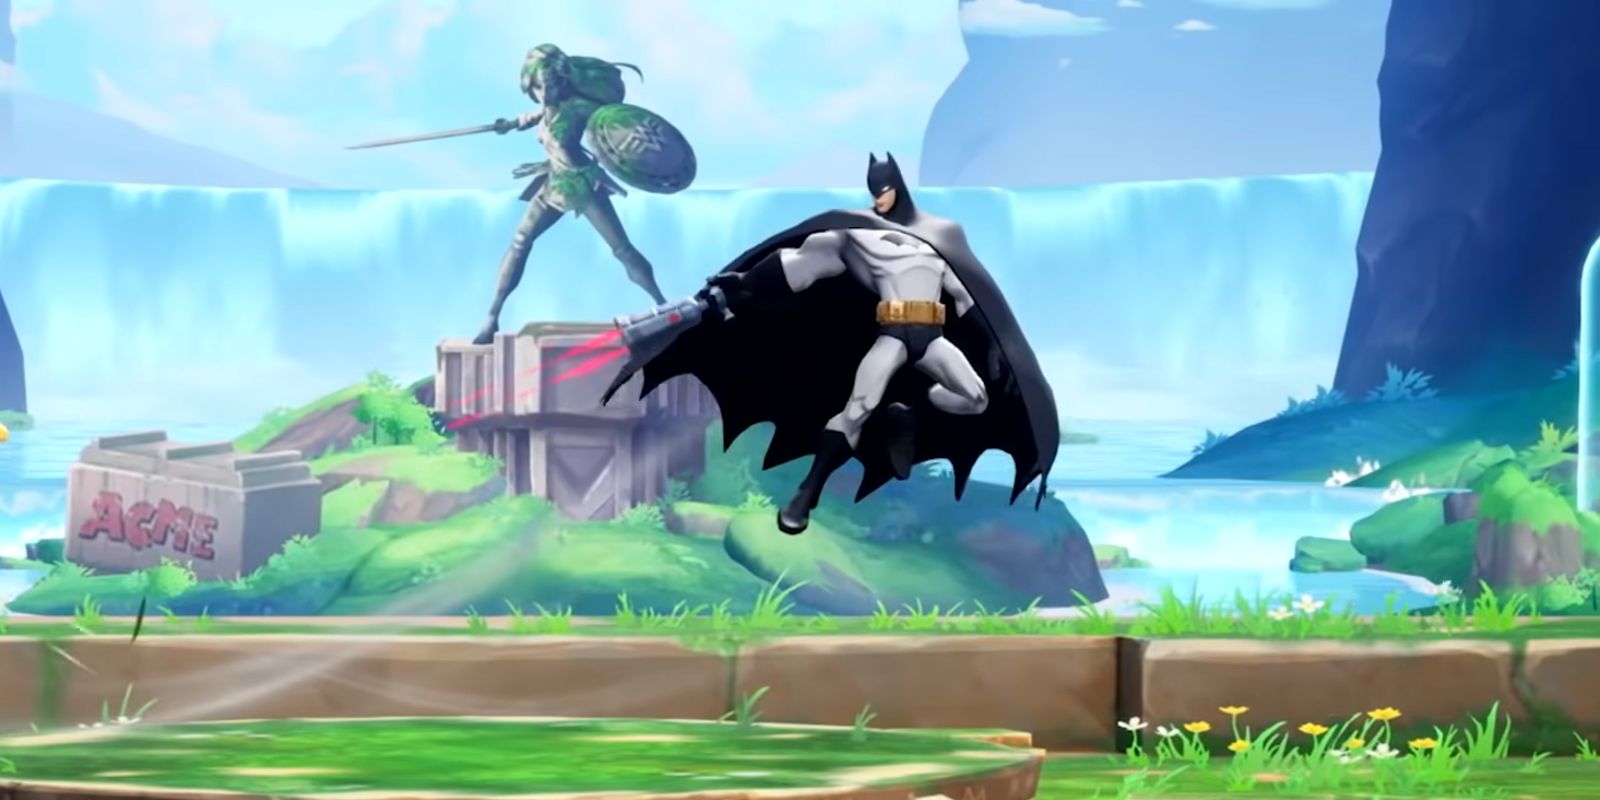 Batman aiming his grapnel gun on Themyscira in MultiVersus